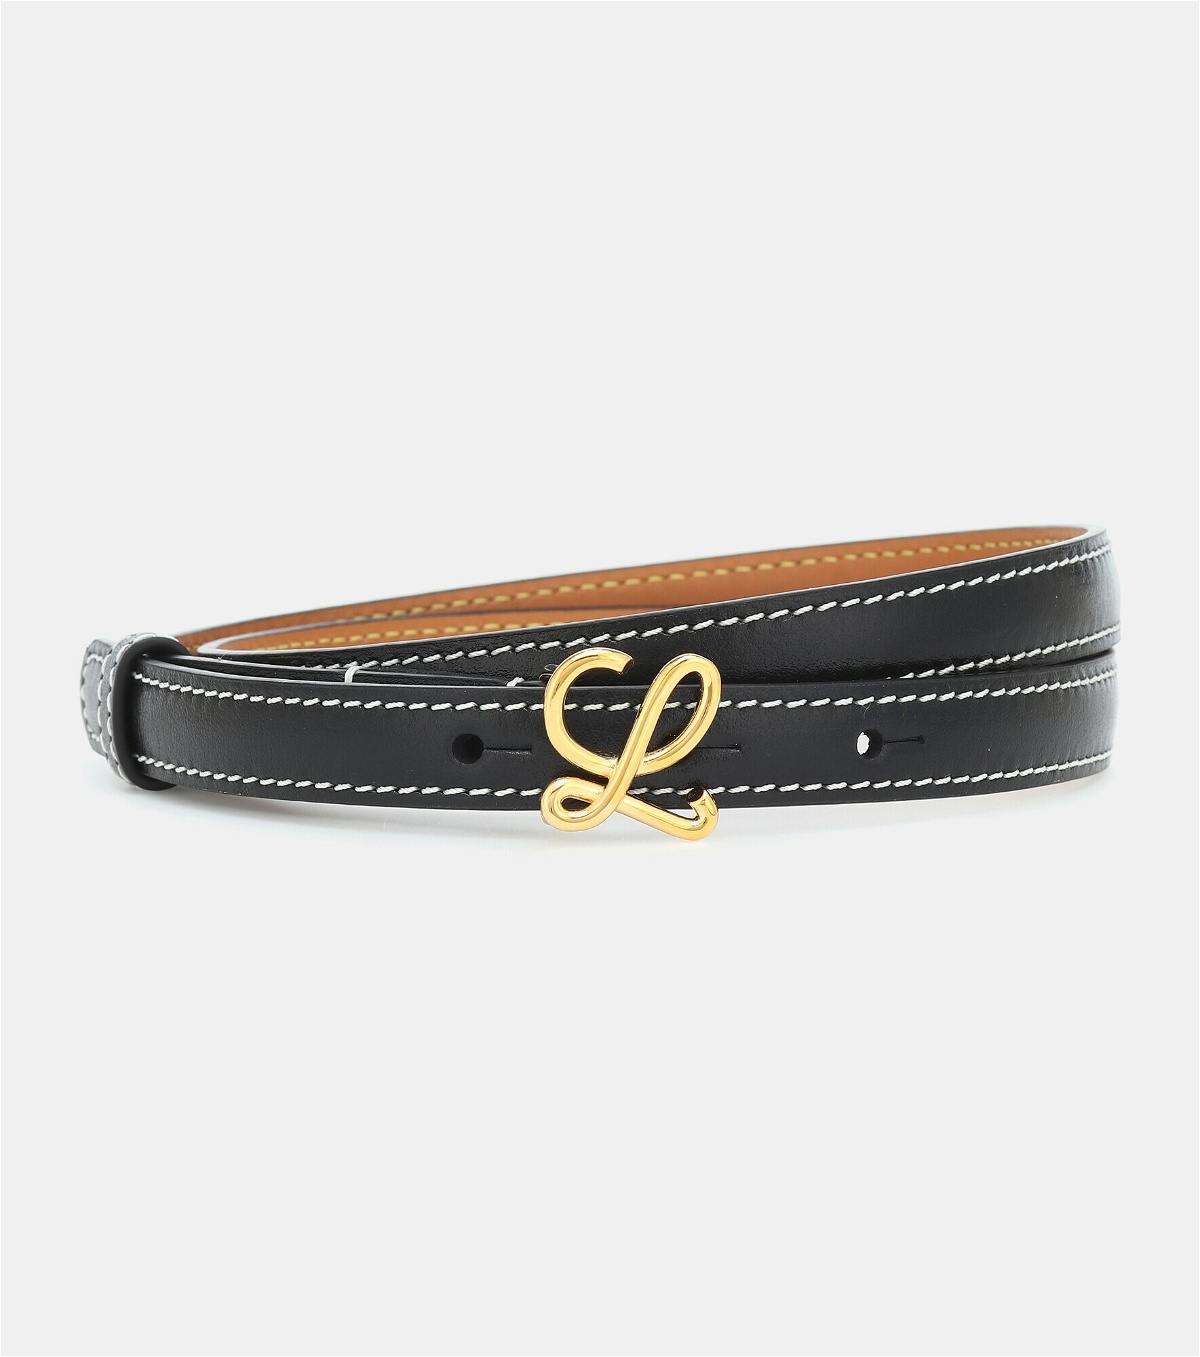 Loewe - Leather belt Loewe